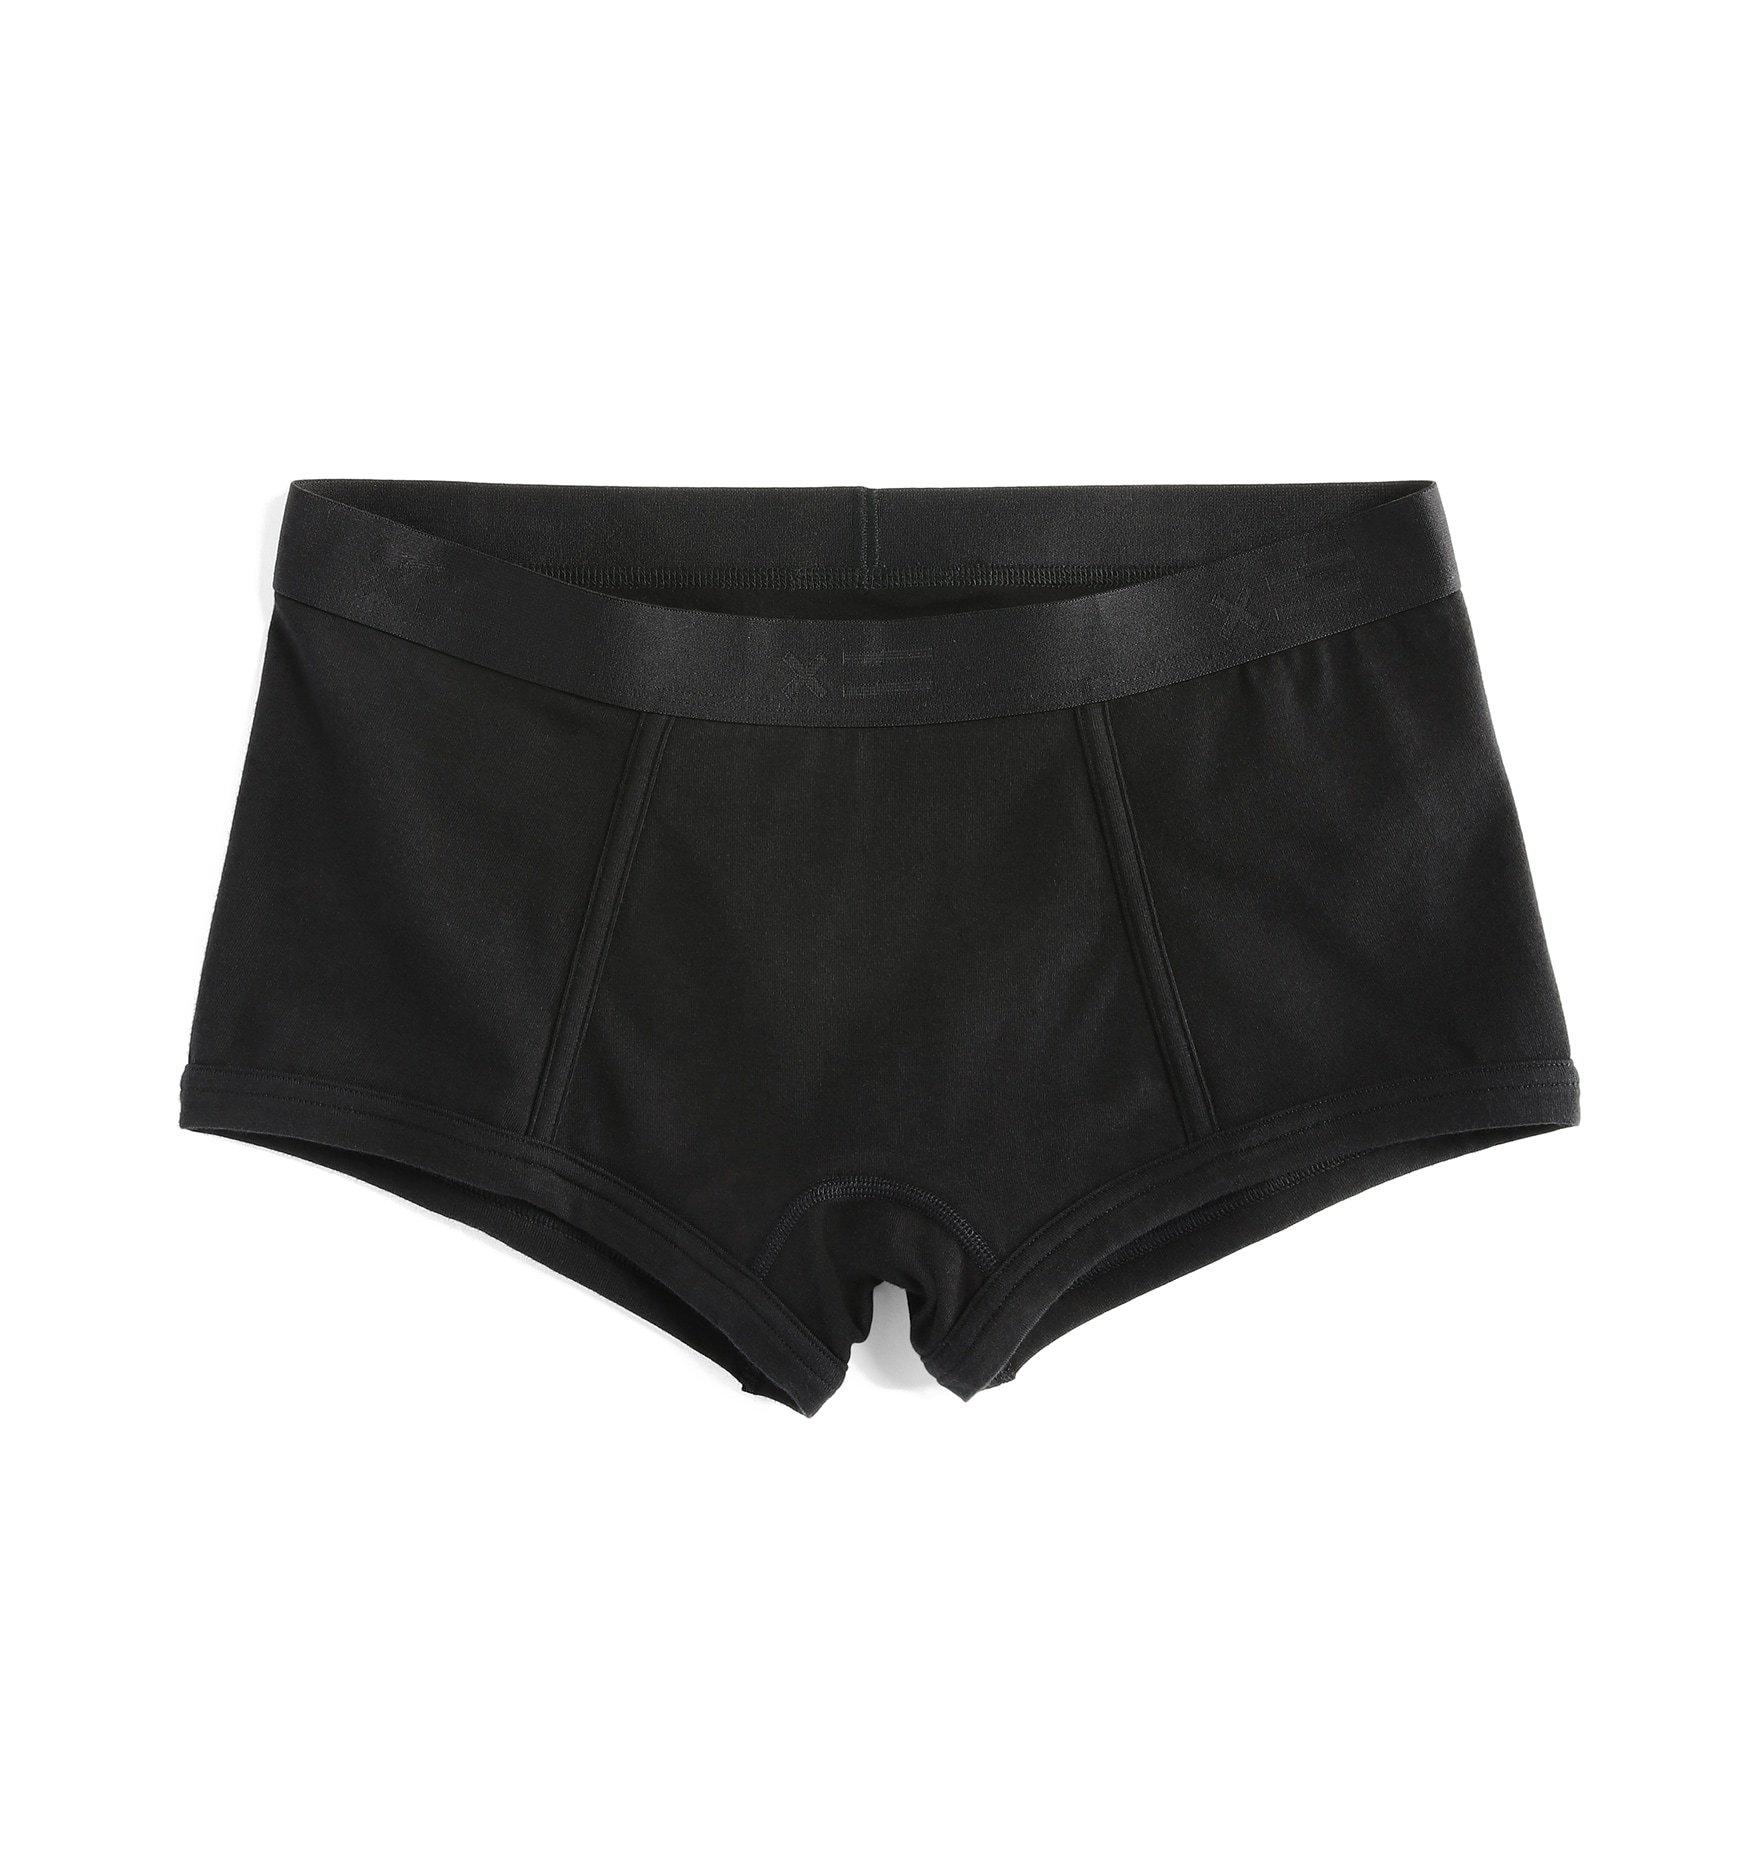 First Line Period Boy Shorts - X= Black – TomboyX